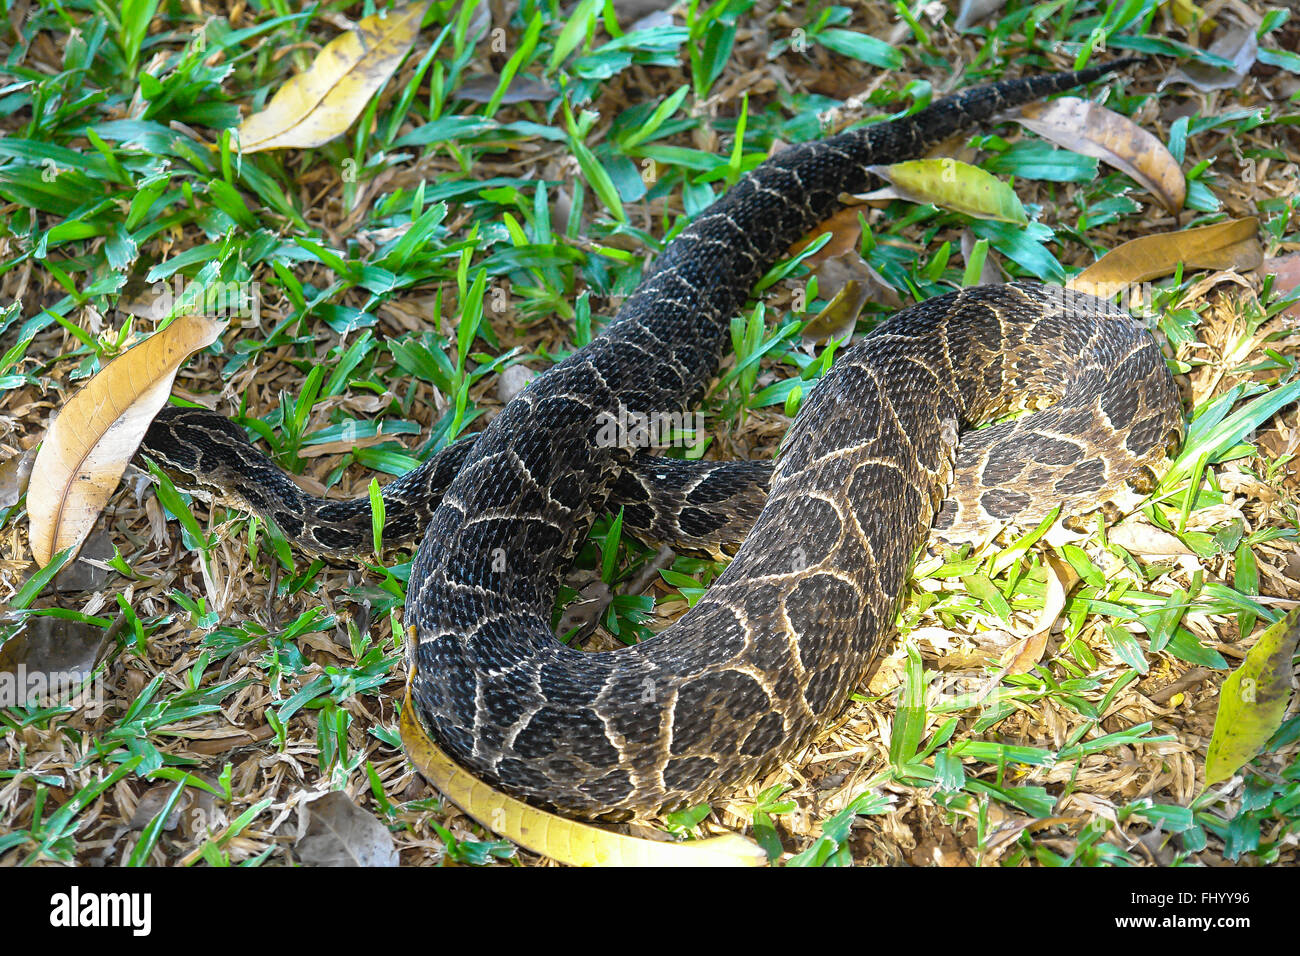 Yarara Crucera dangerous snake Stock Photo